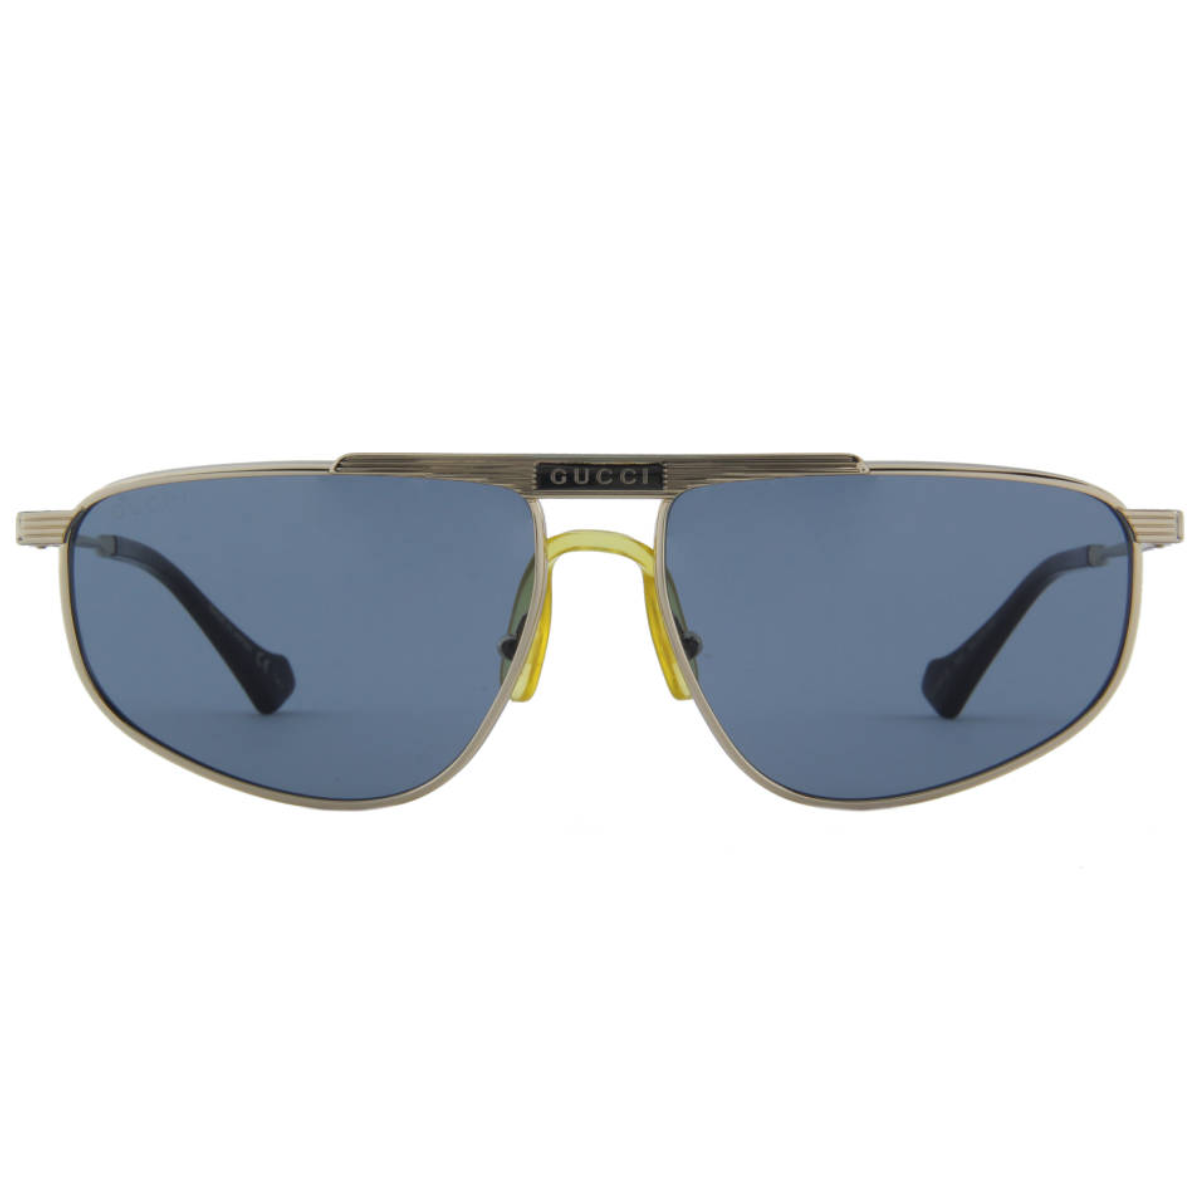 "Gucci 0841S Sunglasses: Optorium's Men's Collection"